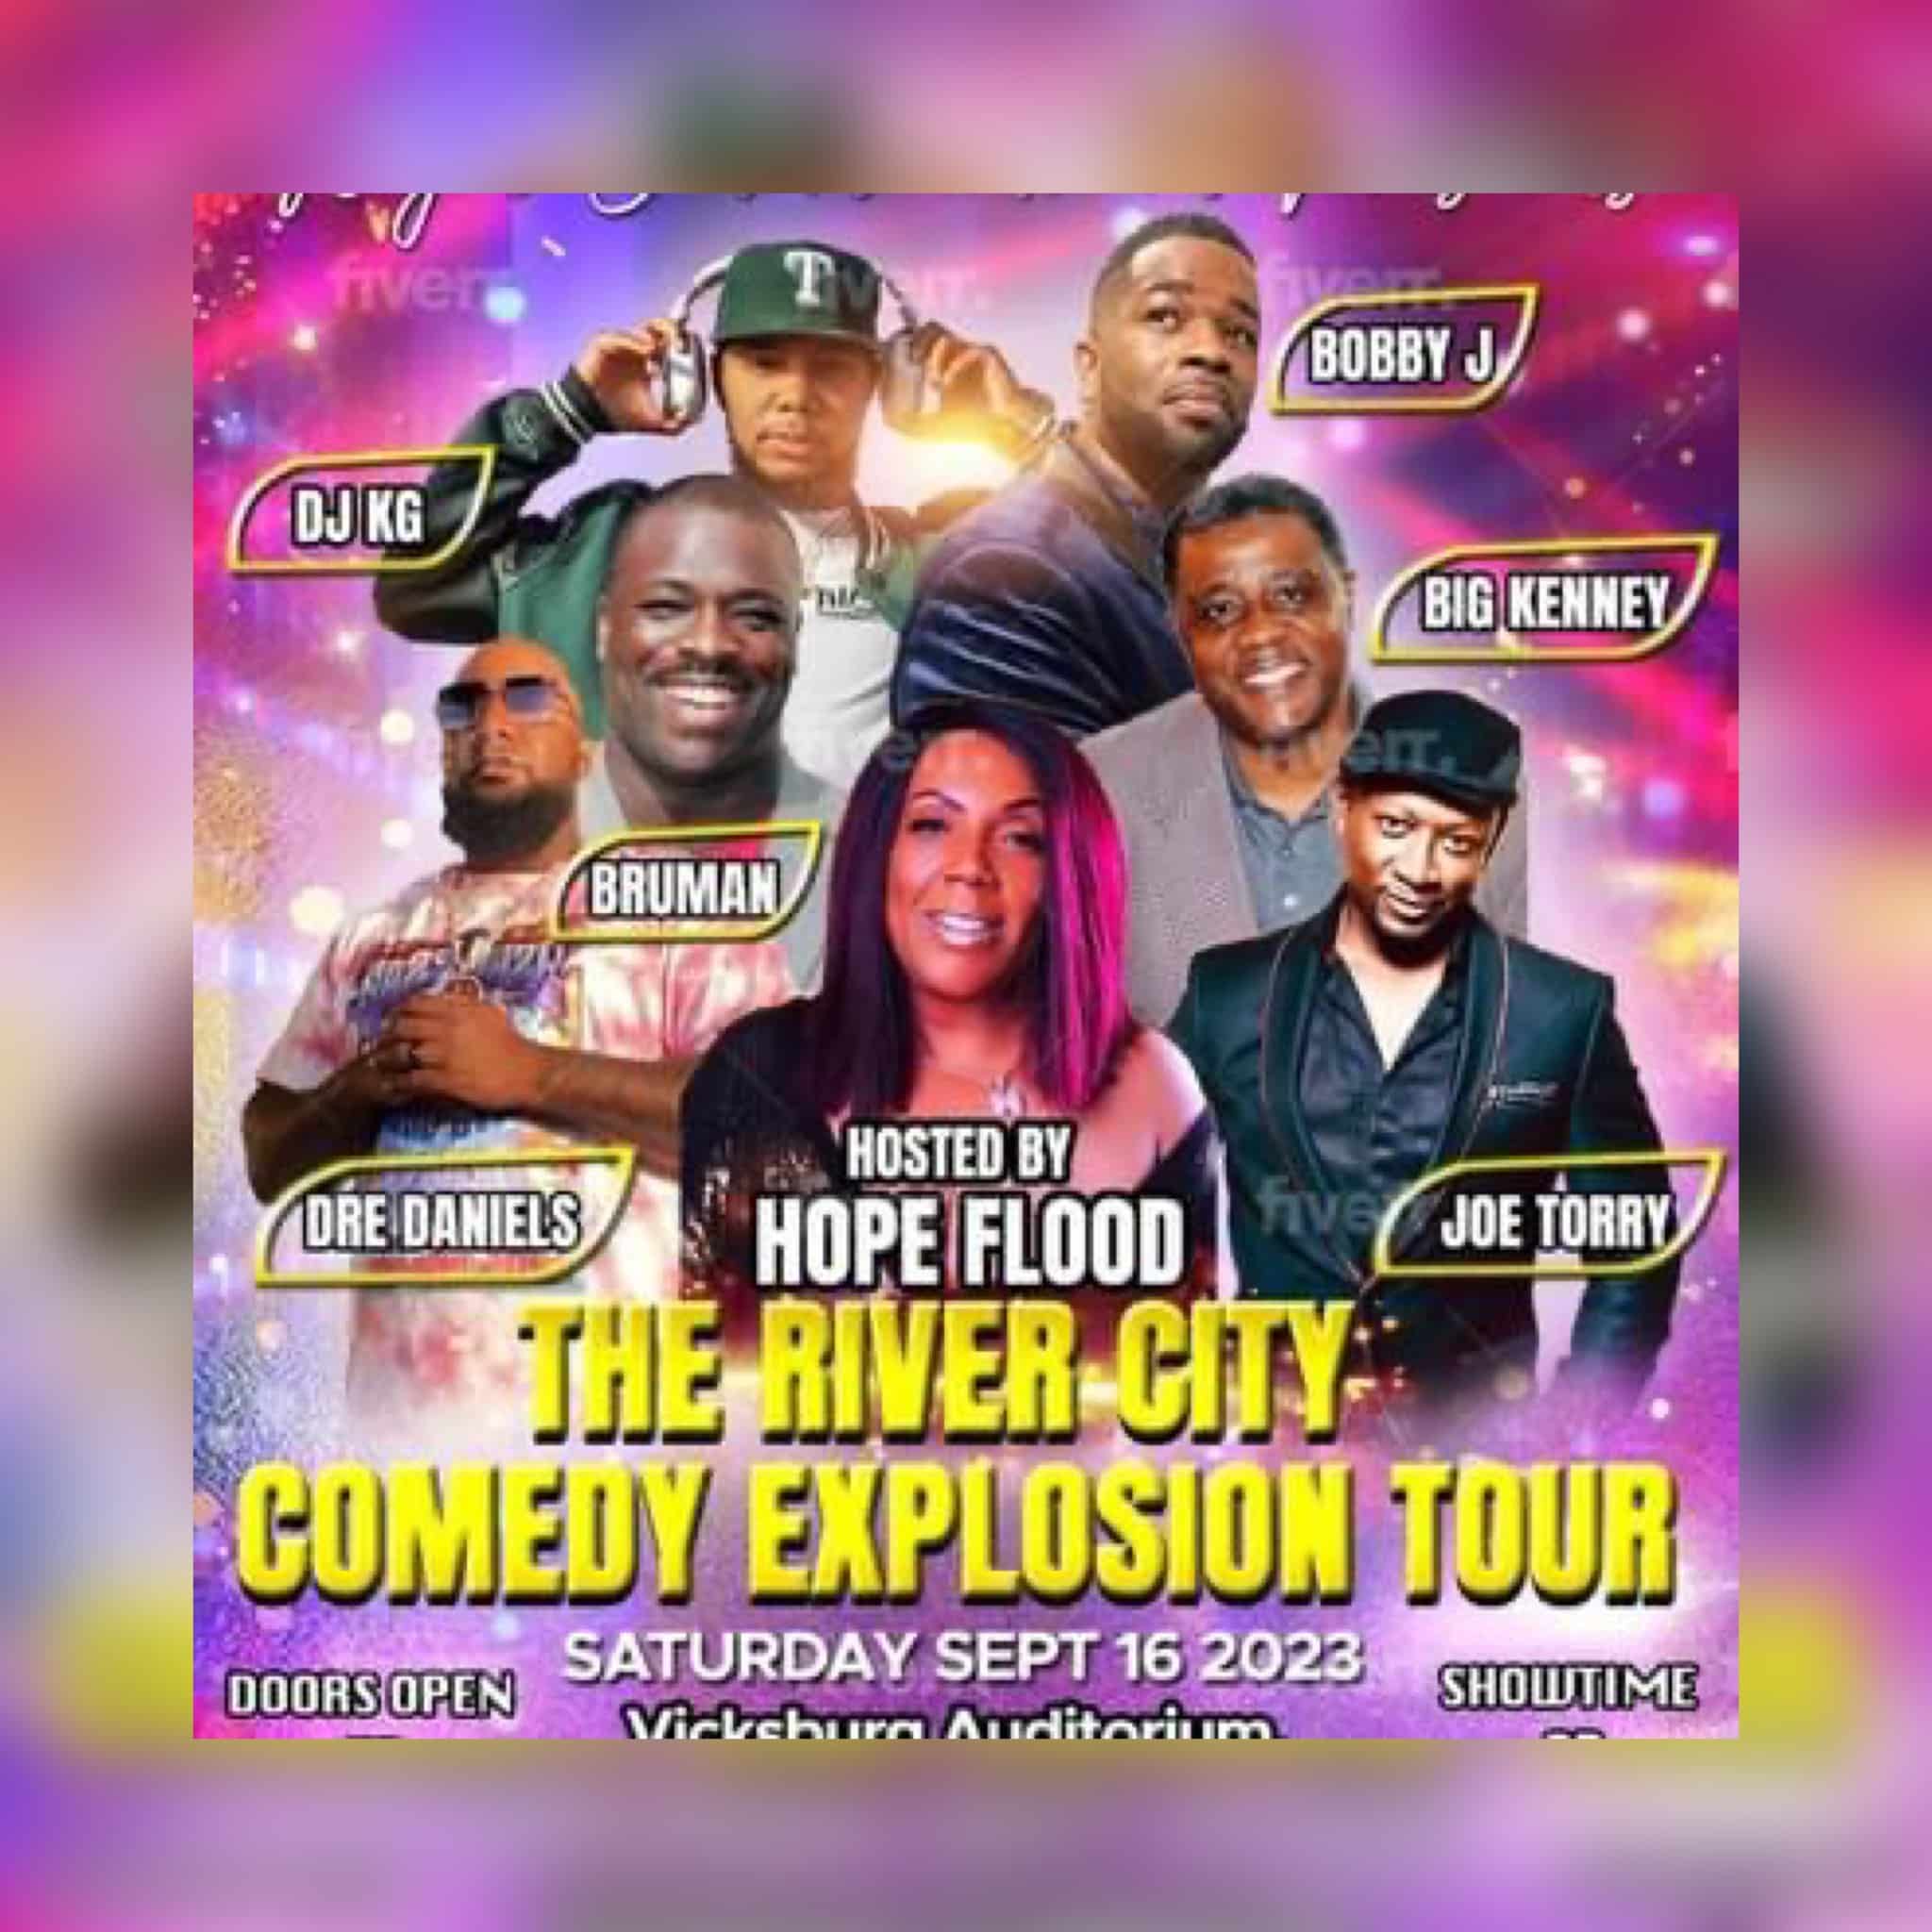 Comedy tour flyer